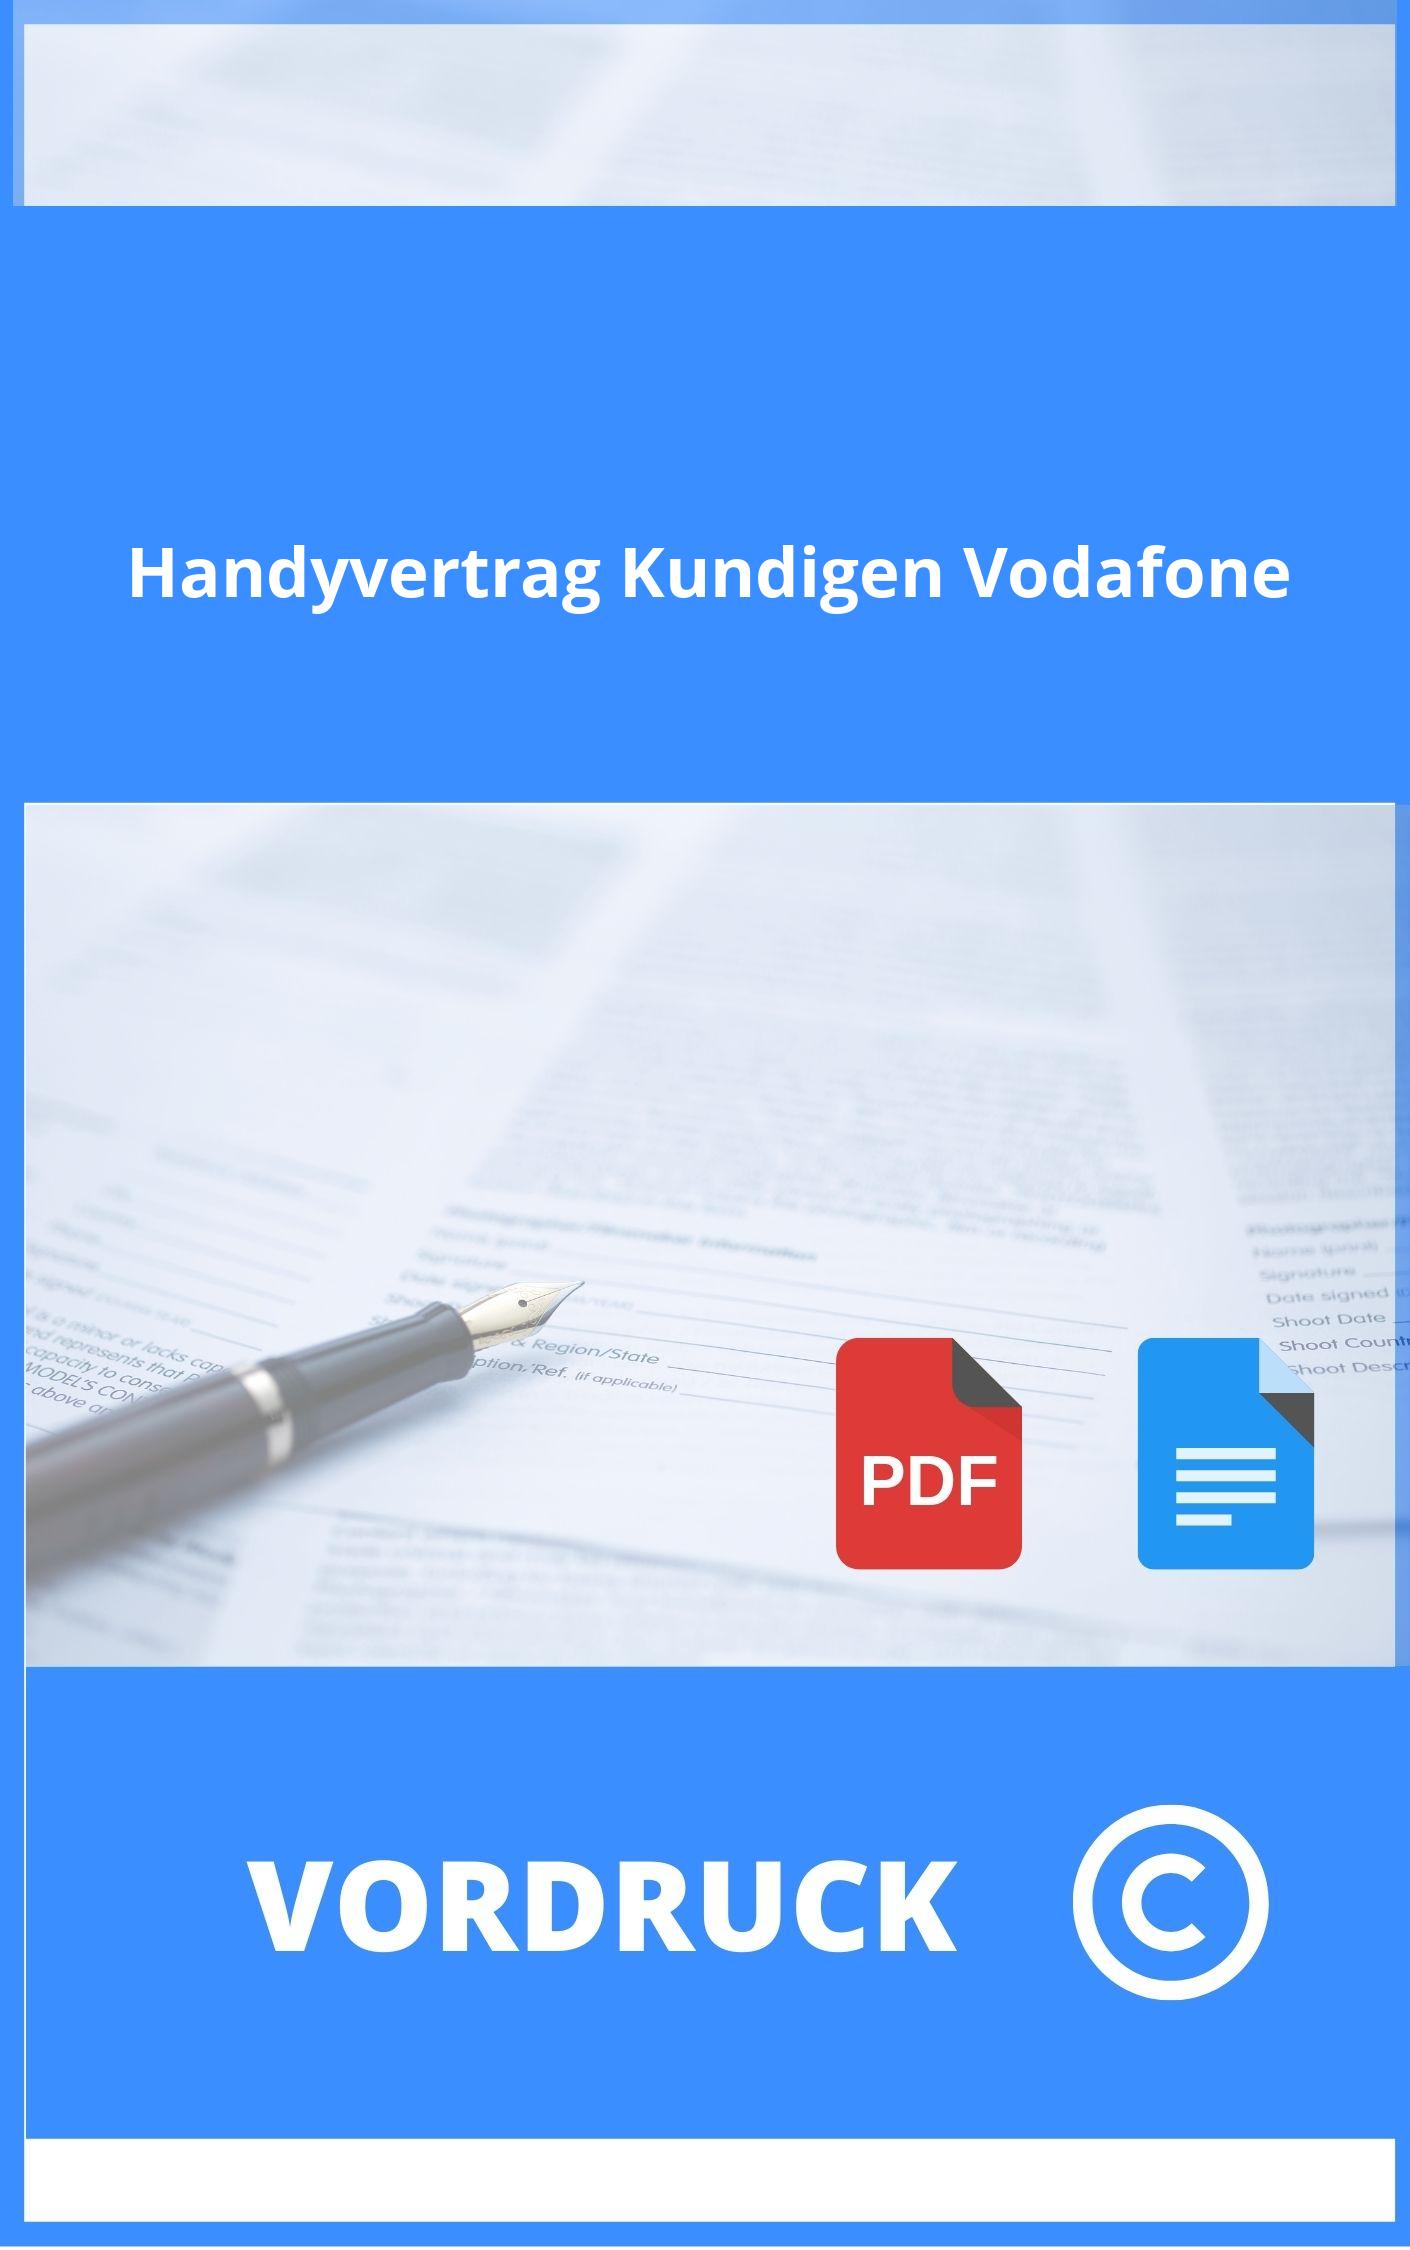 Handyvertrag Kündigen Vodafone Vordruck